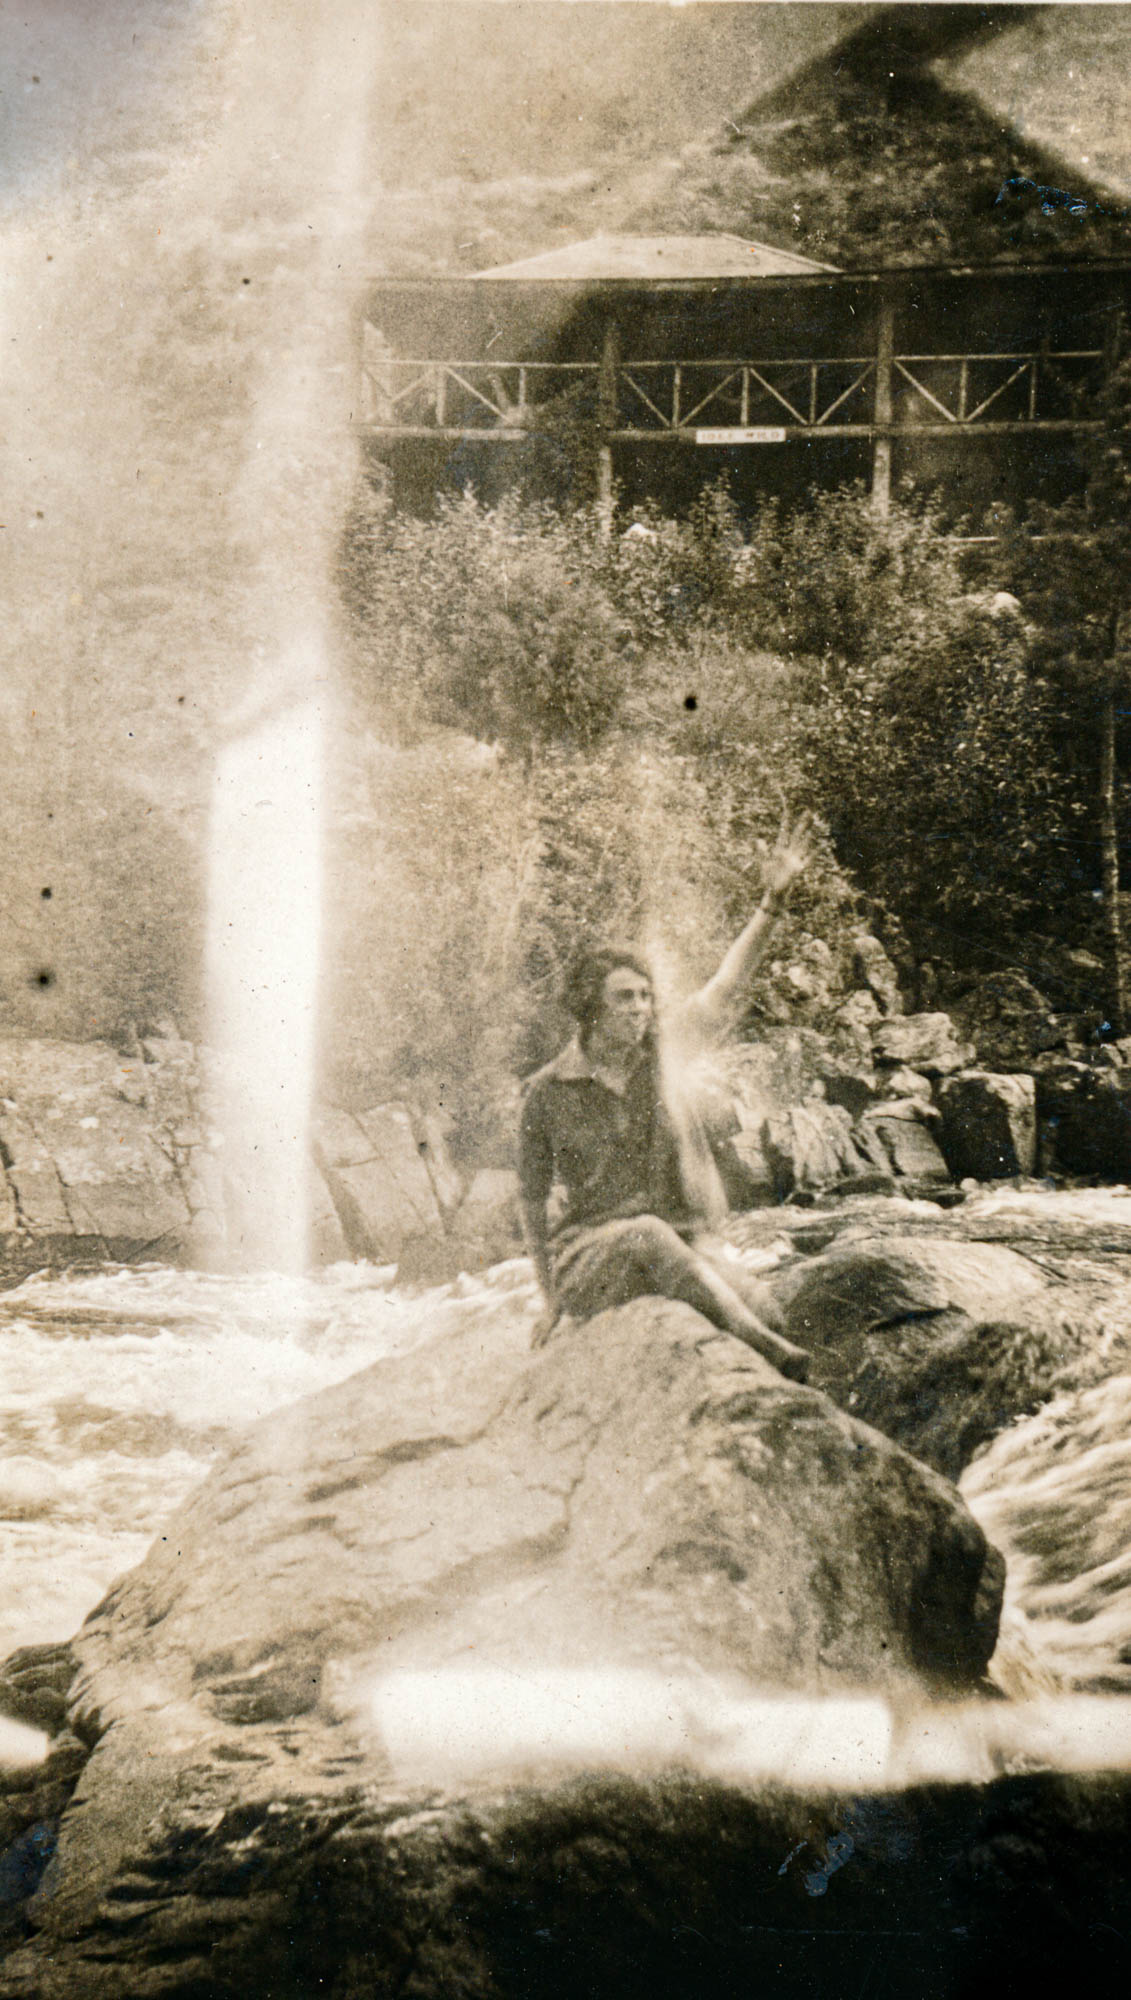 Idlewild Lodge - idlewildlodge.github.io - Circa 1923 - Elizabeth Dauth In River In Front of Idlewild